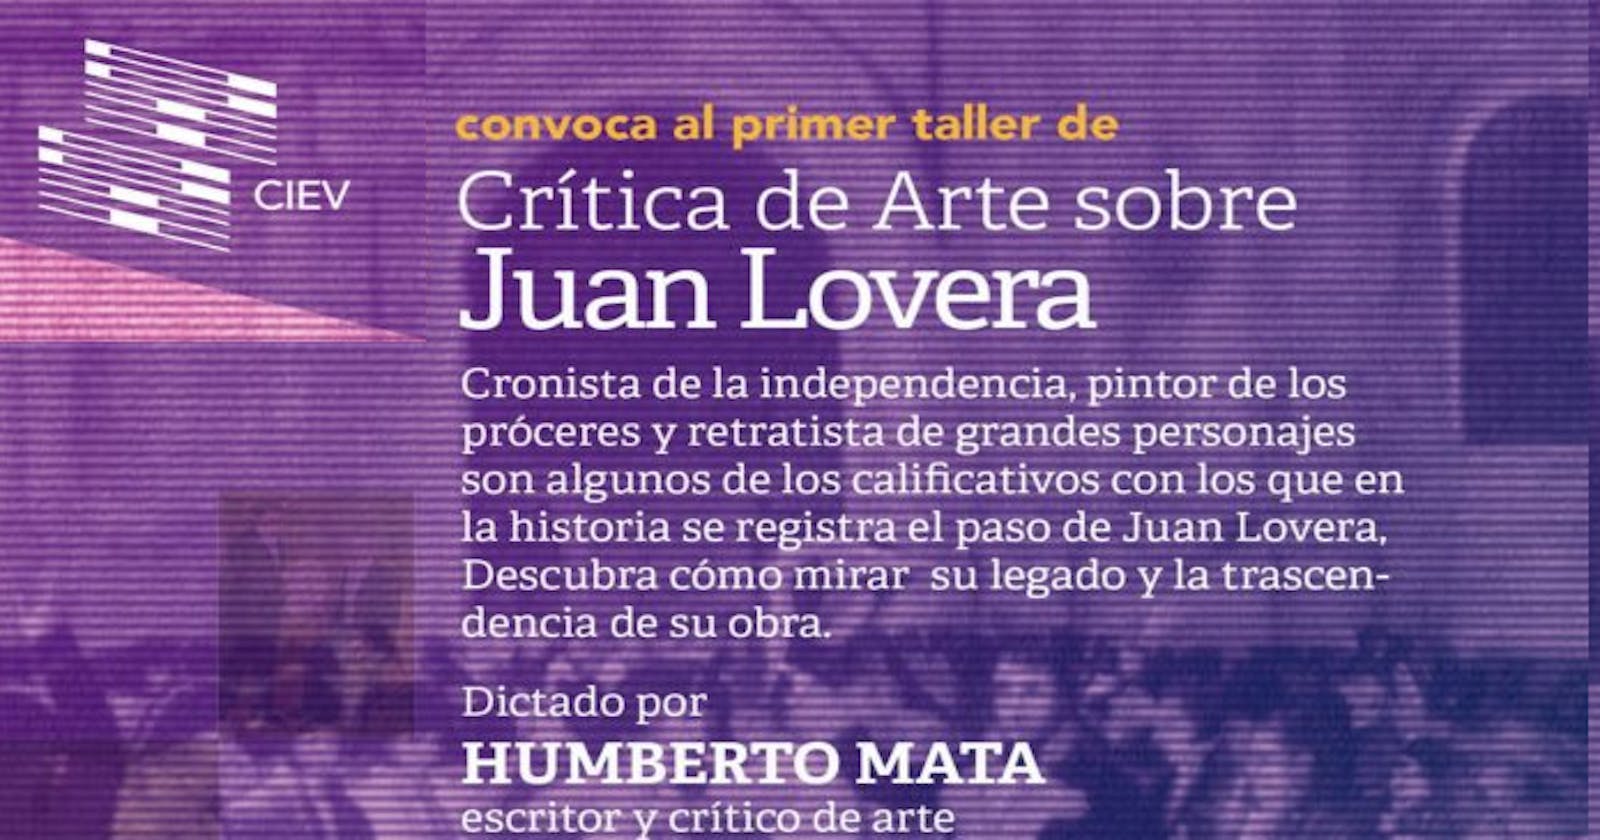 Actividad realizada: Taller de crítica de arte sobre Juan Lovera